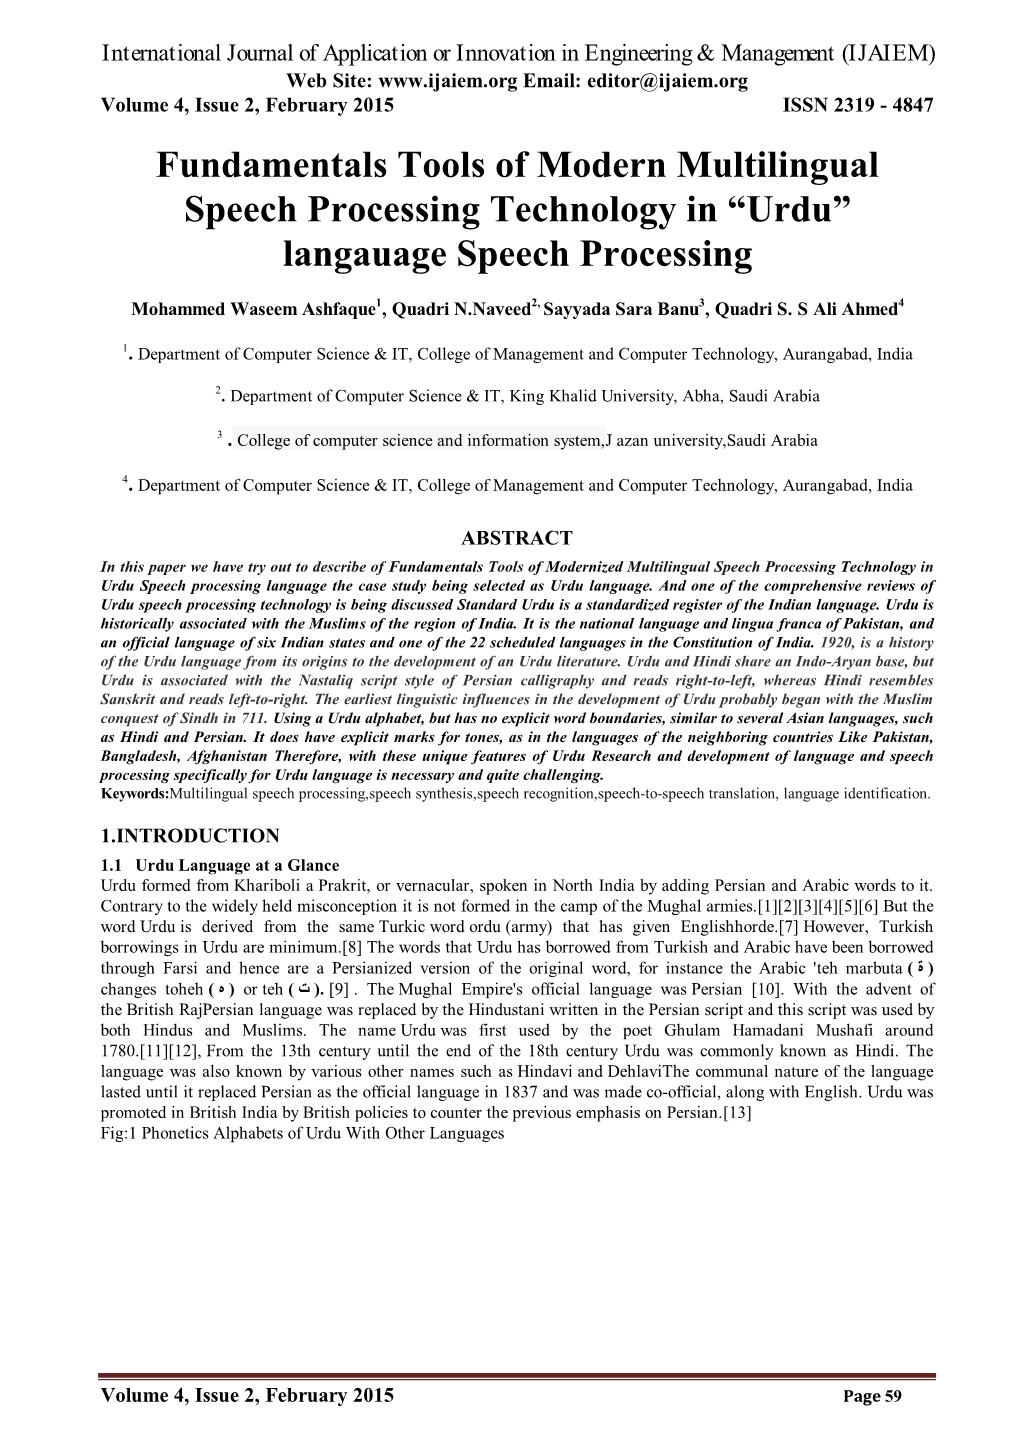 Urdu” Langauage Speech Processing